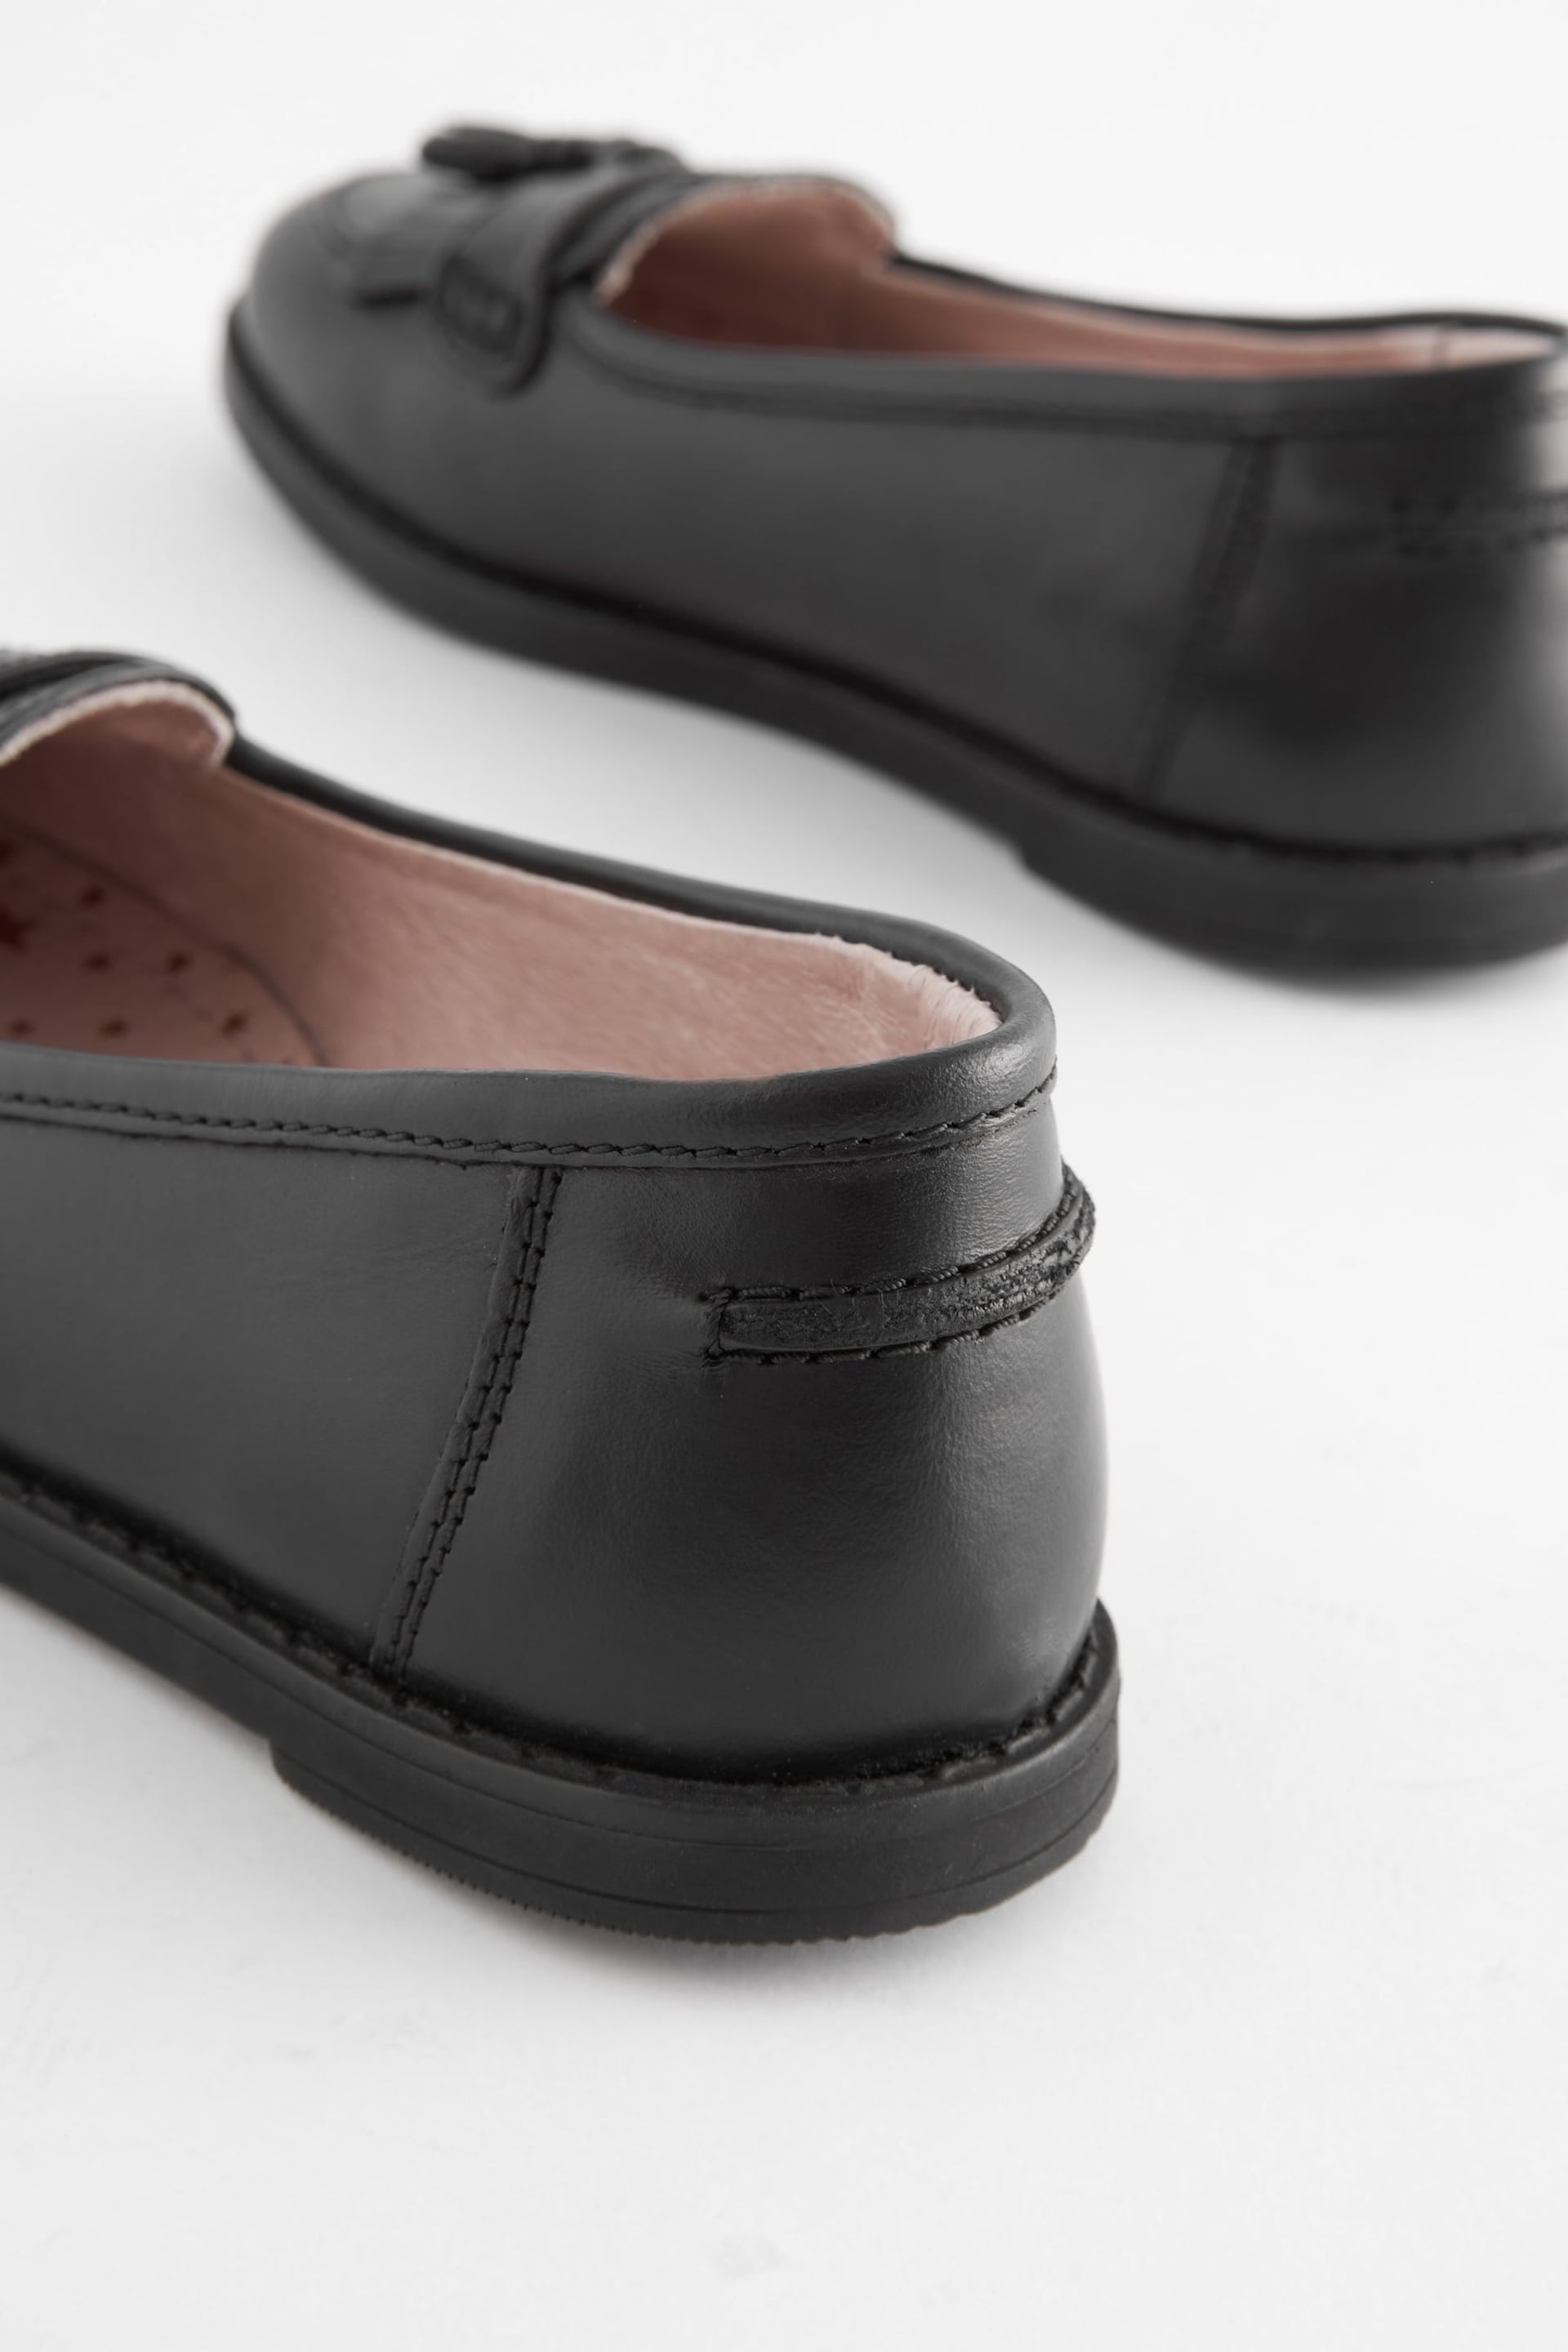 Black Standard Fit (F) School Leather Tassel Loafers - Image 4 of 5